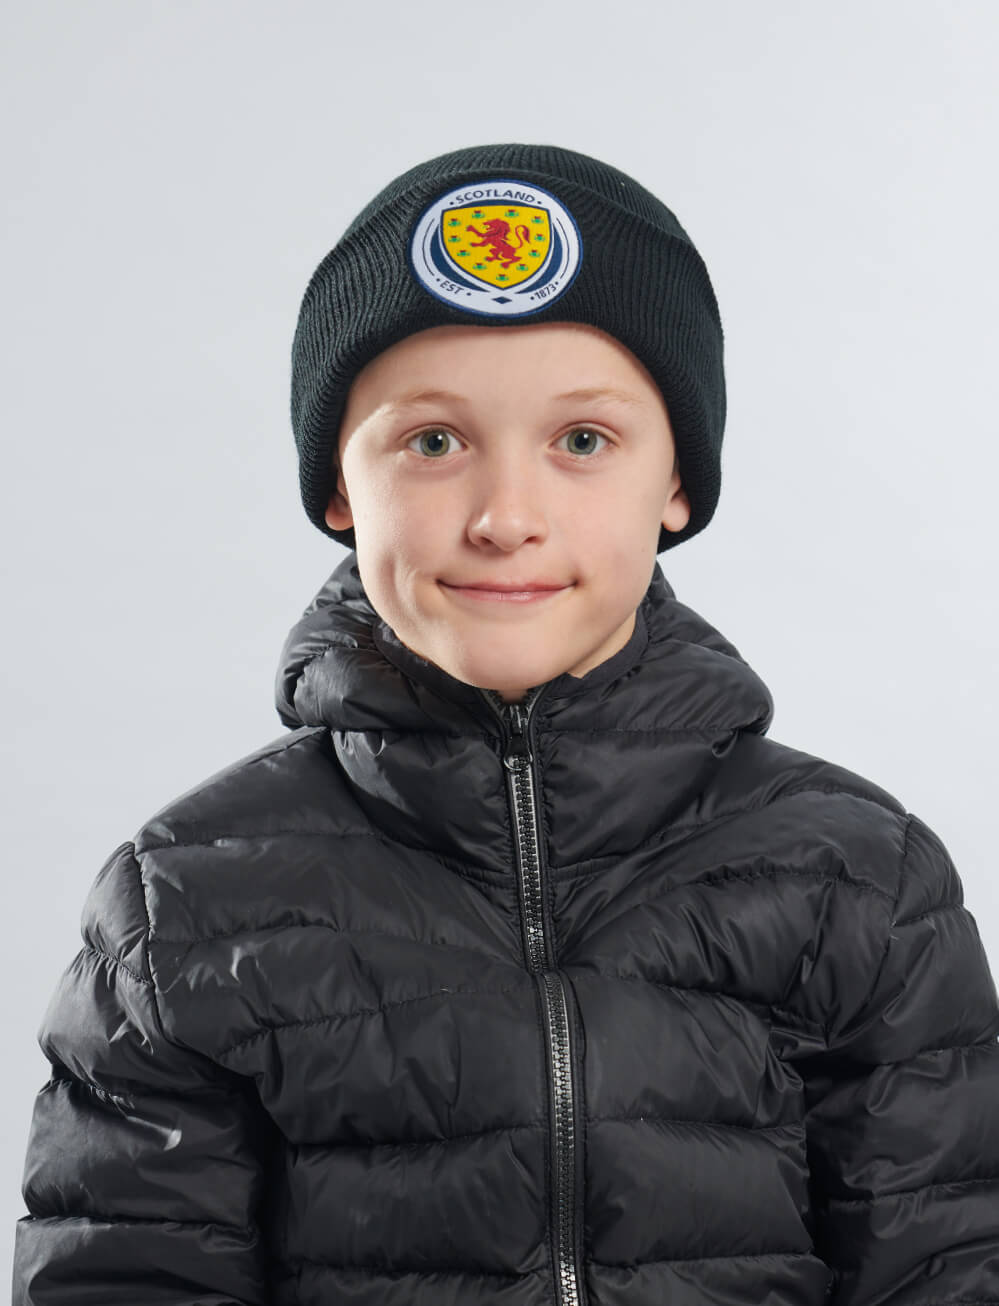 Official Team Scotland Kids Beanie - Black - The World Football Store